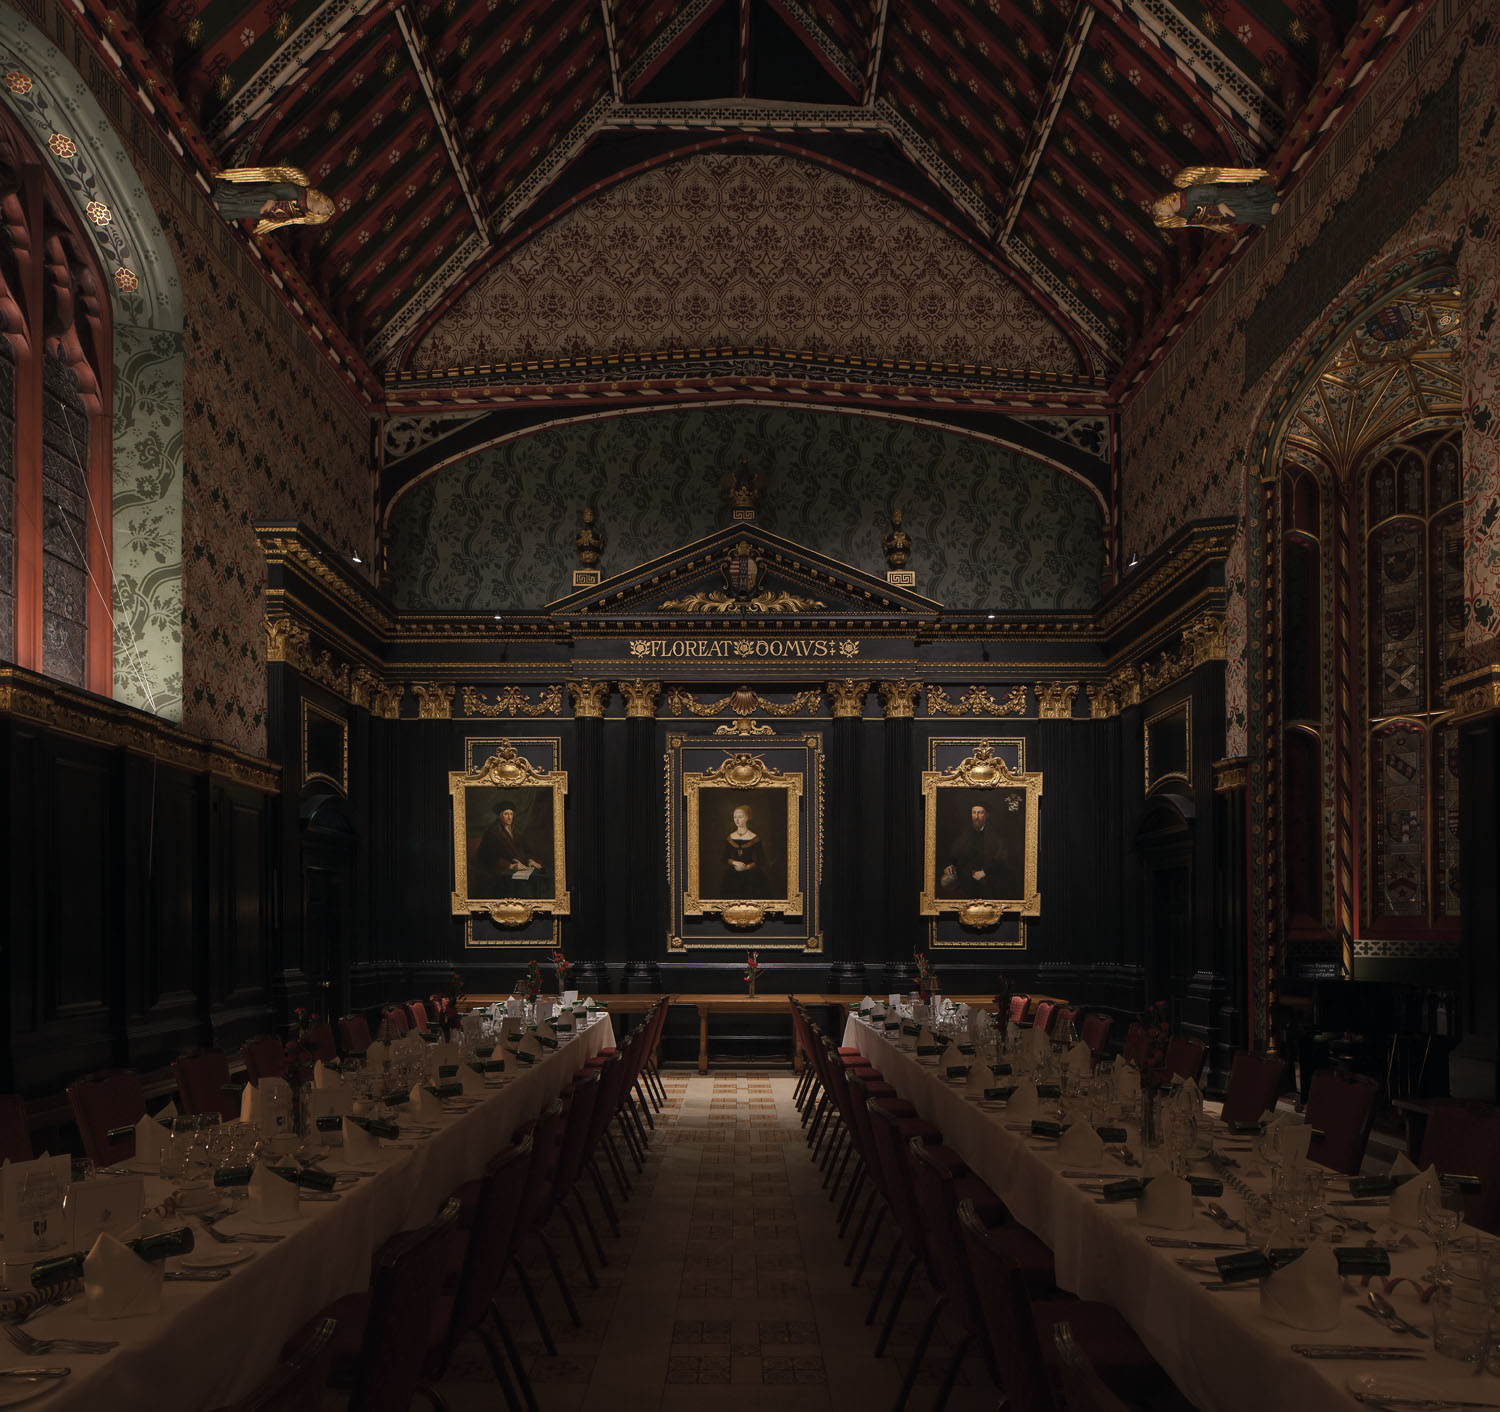  Lighting upgrade - The Old Hall, Queen's College, Cambridge 